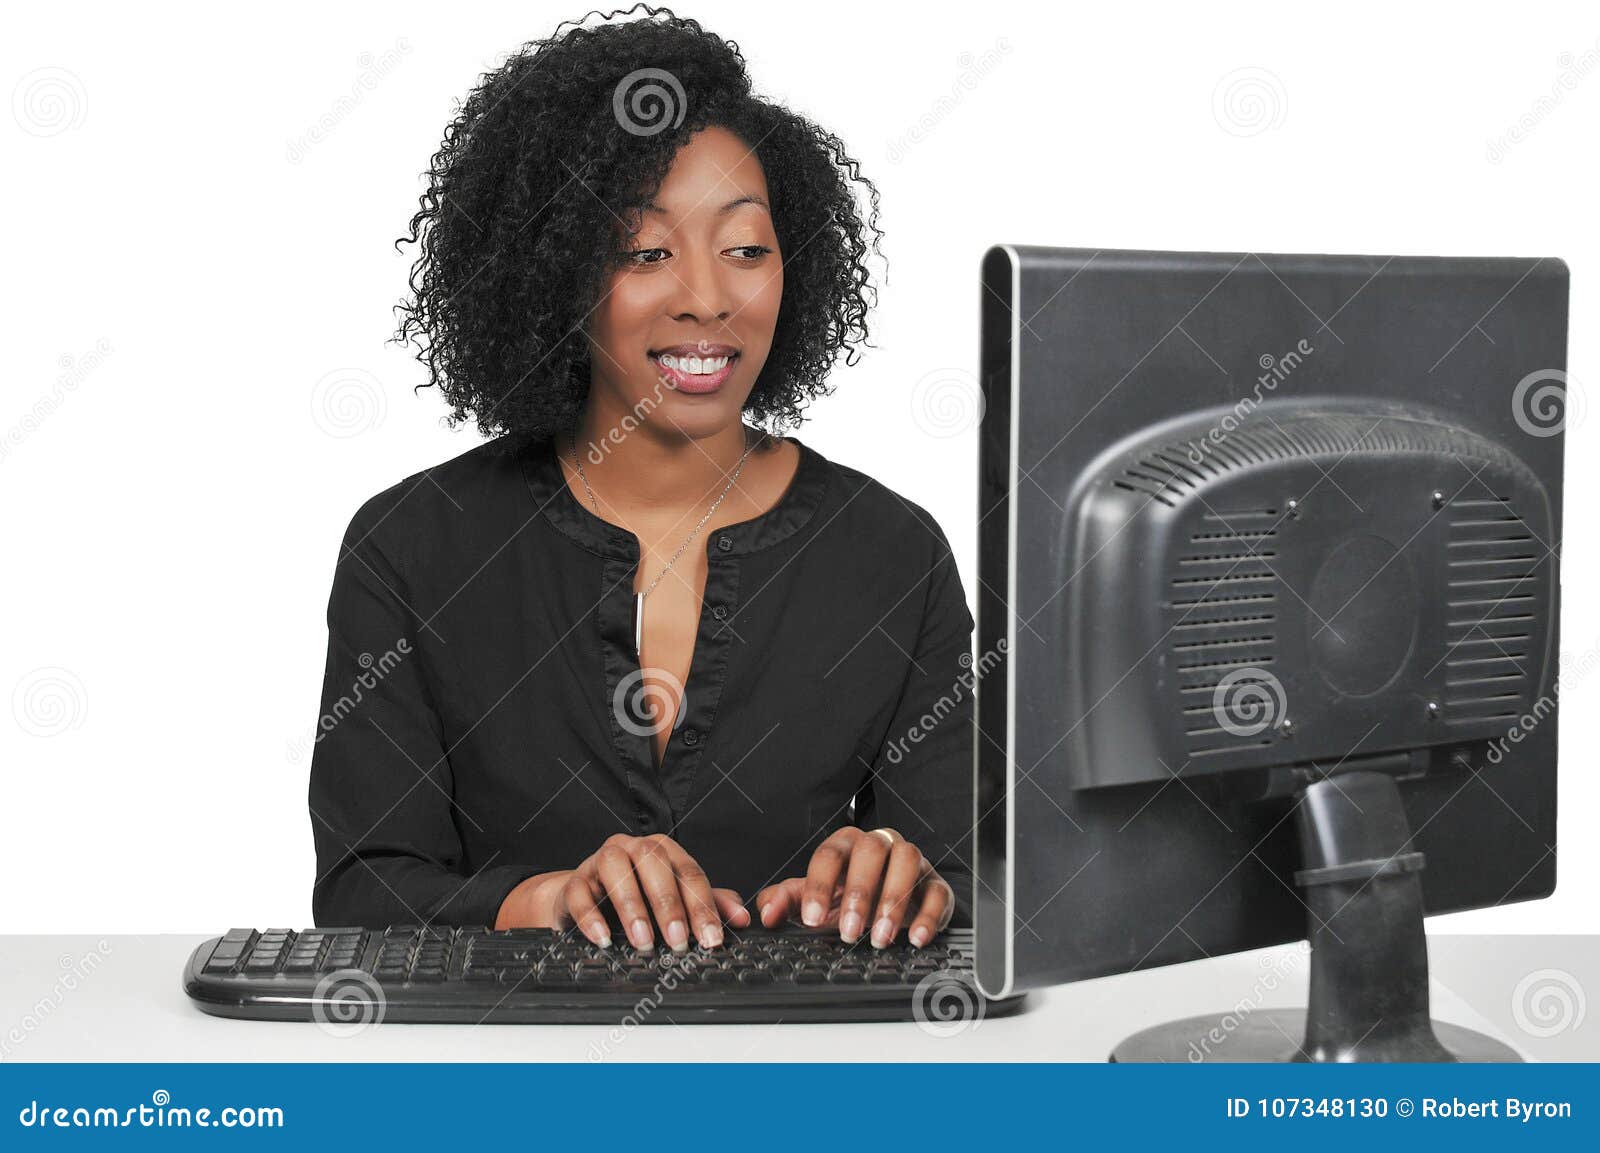 woman on desktop computer